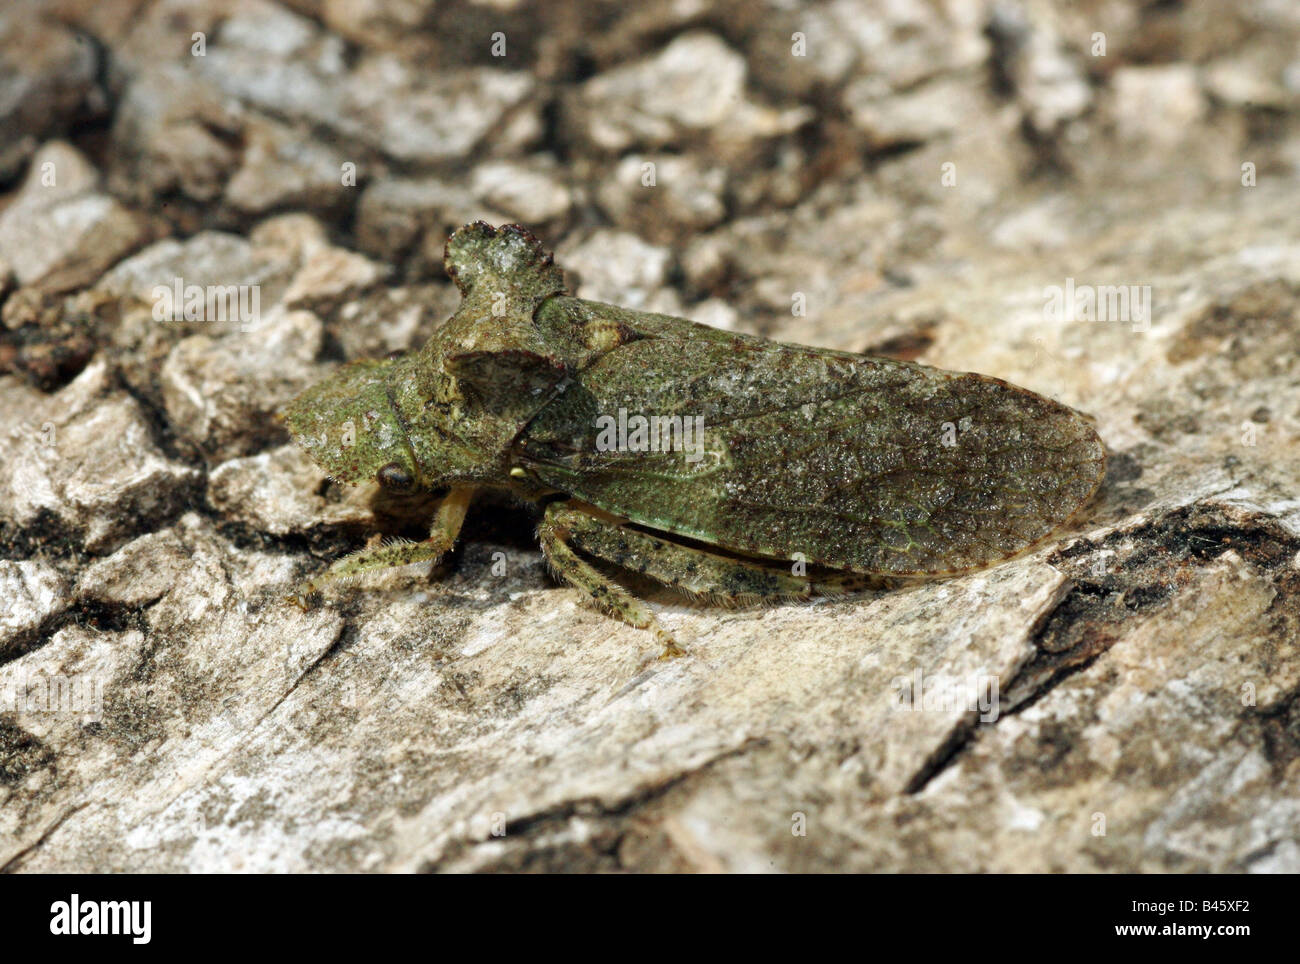 Zoologie, les insectes, les cicadelles, Horned leaf hopper (Ledra aurita), sur-Clearance-Info Additional-Rights bork,-Not-Available Banque D'Images